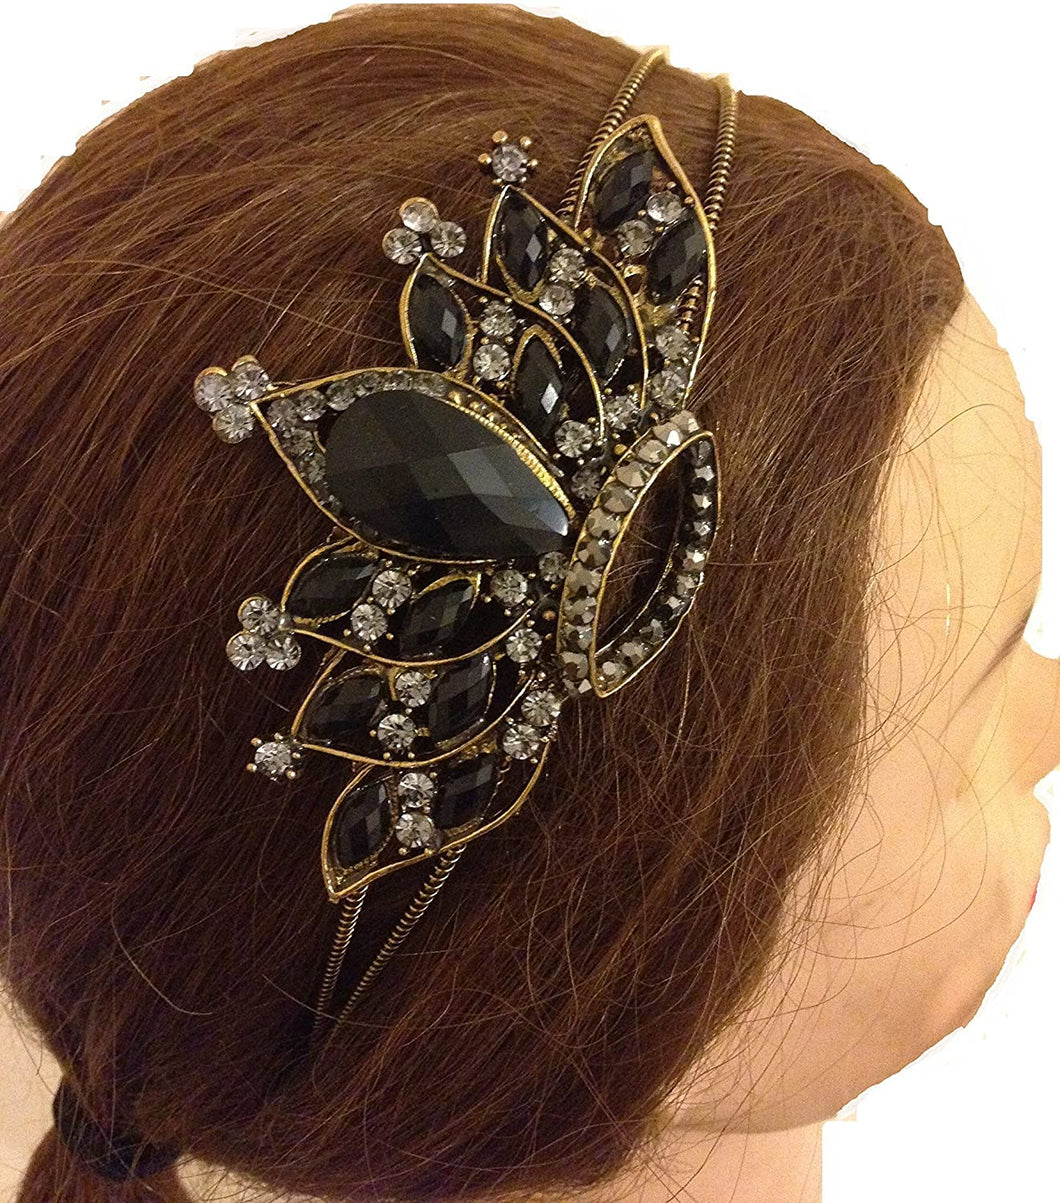 Black crown design aliceband, headband with pretty stone